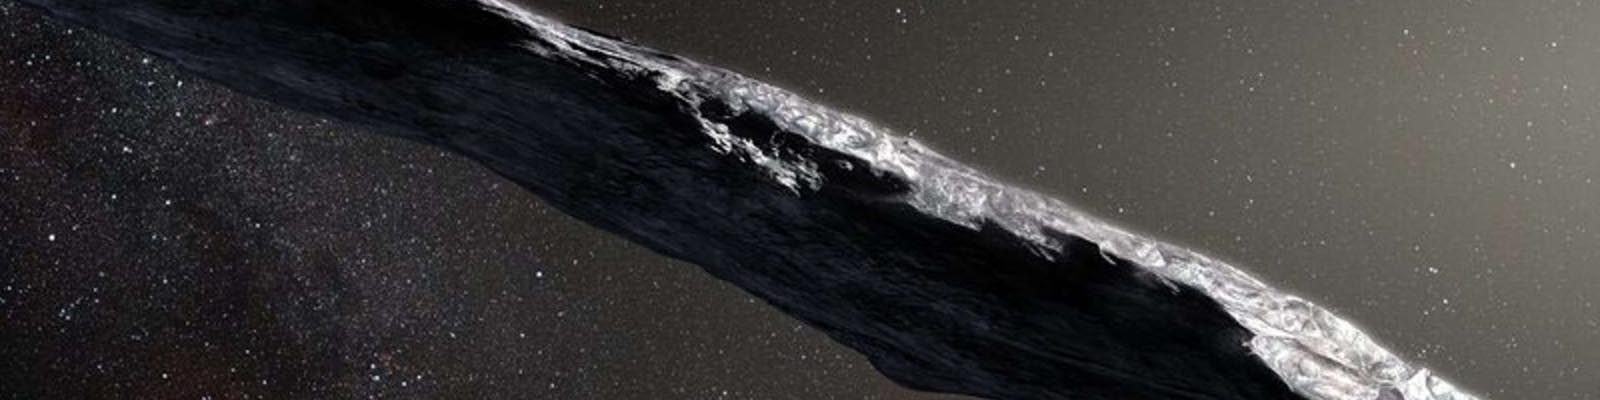 Illustration Oumuamua